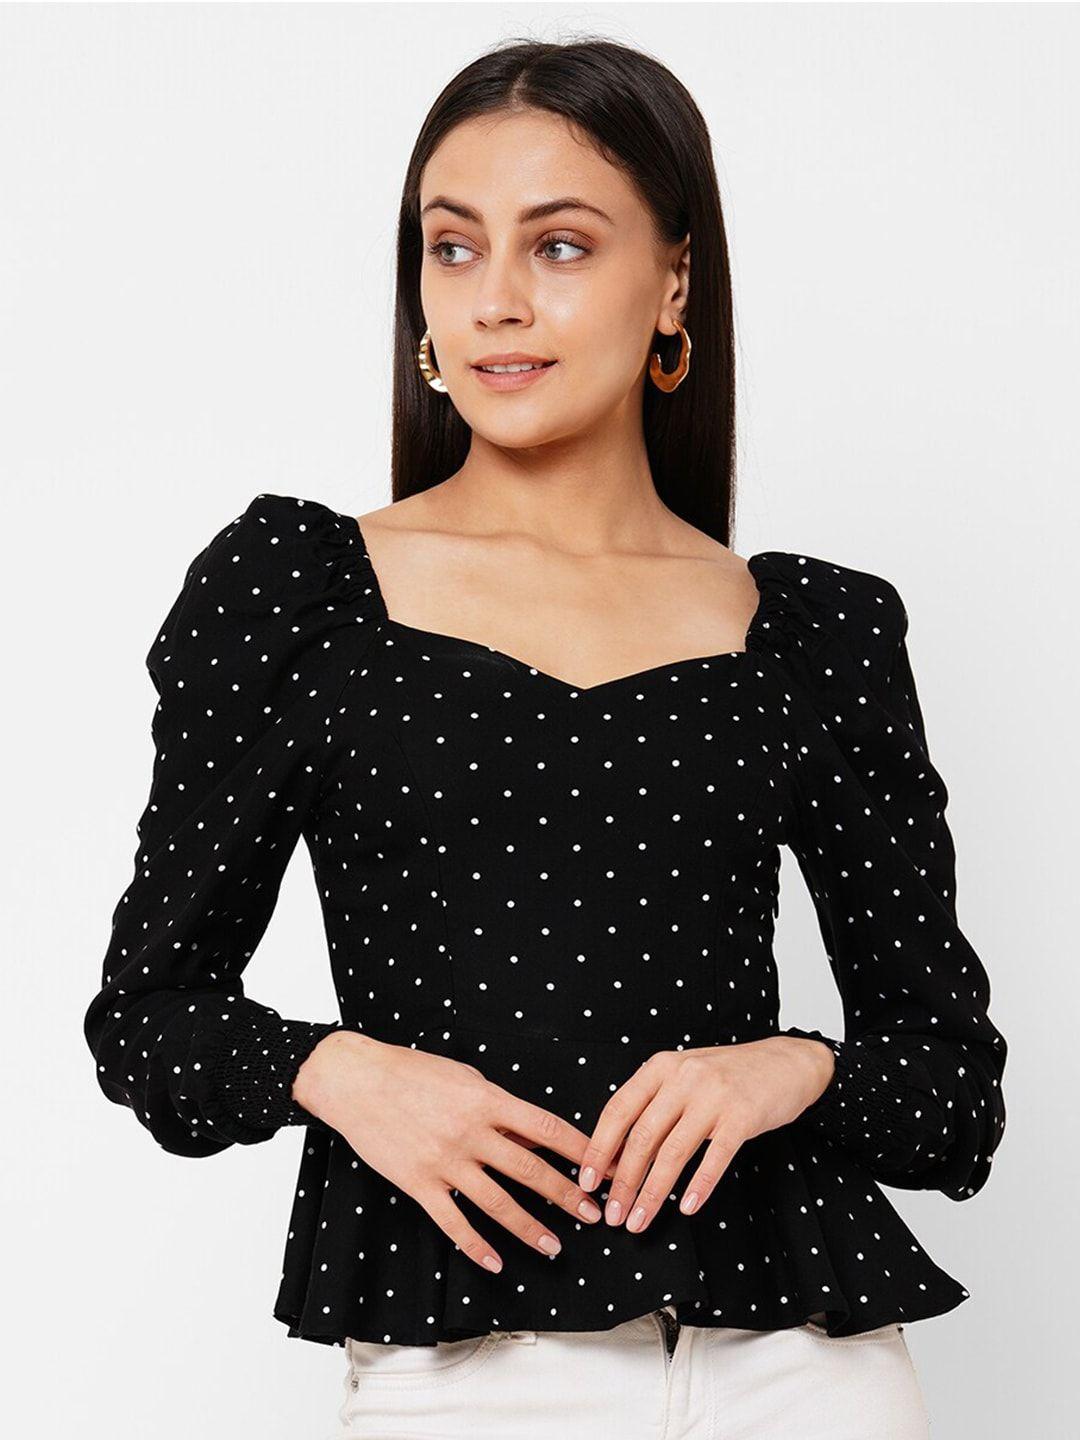 20dresses women black & white polka dot printed sweetheart neck puff sleeve peplum top